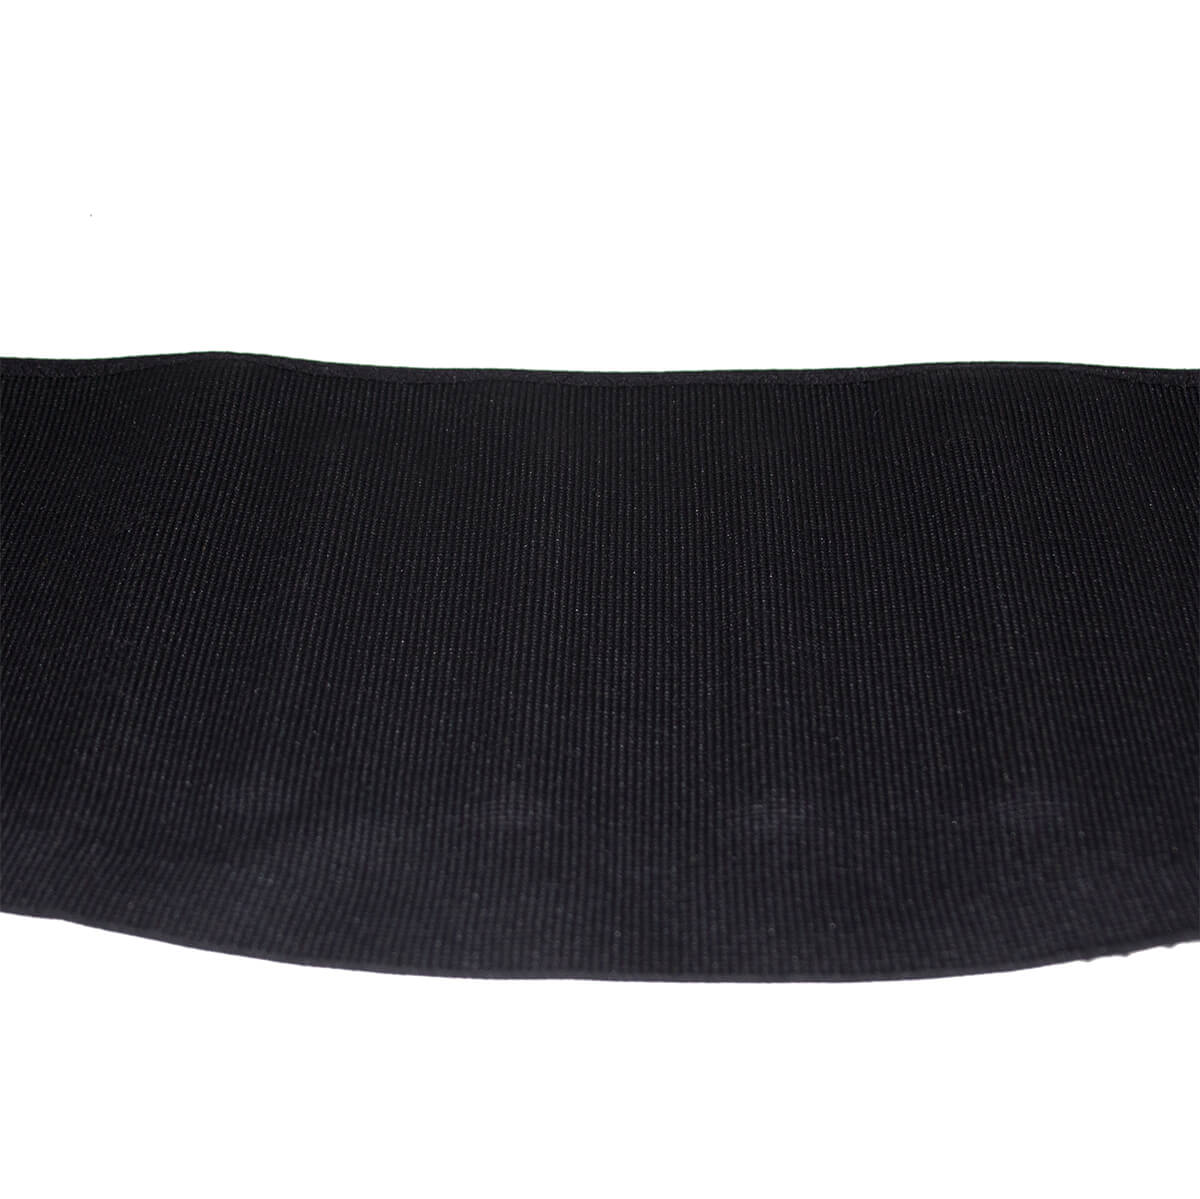 Dunimed Premium comfort Rückenbandage schwarz